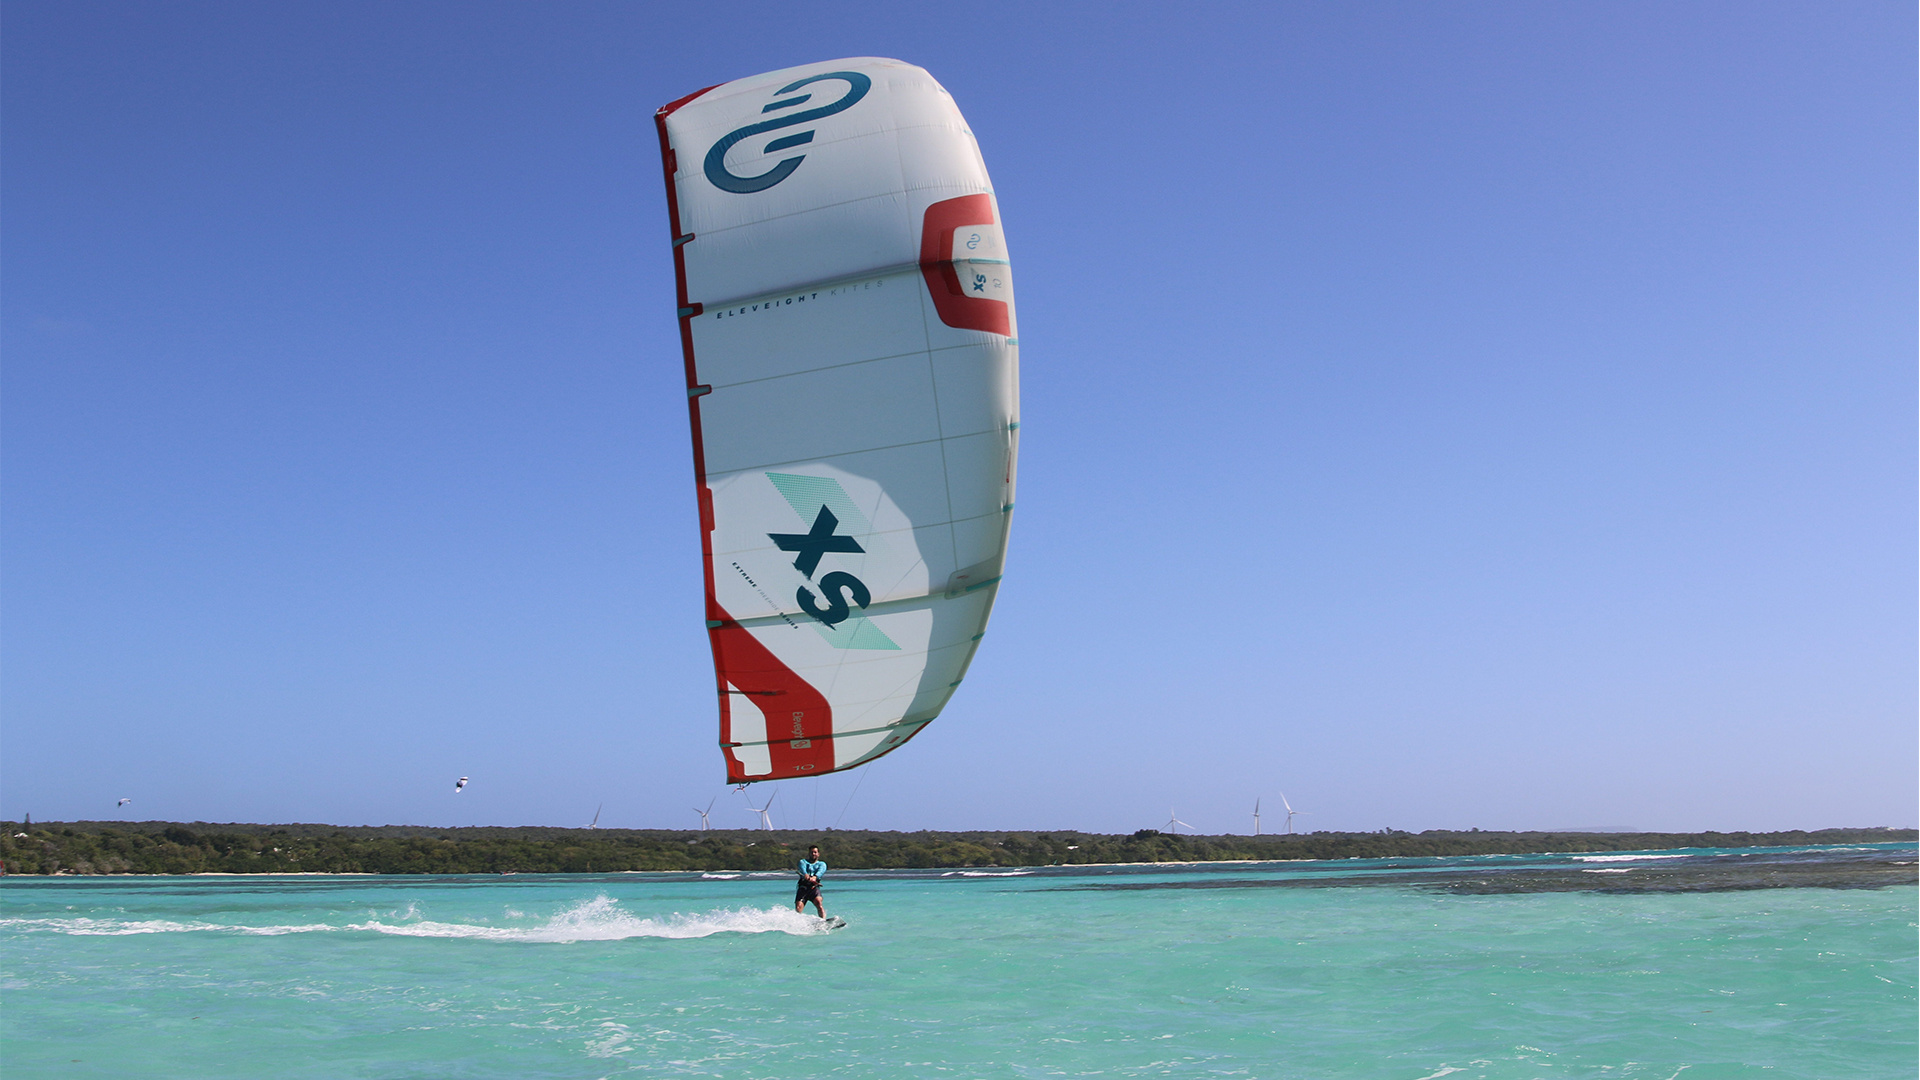 Kiteboarding: Eleveight XS, Delta-hybrid kite, Freeride performance, Distinctive surf. 1920x1080 Full HD Background.